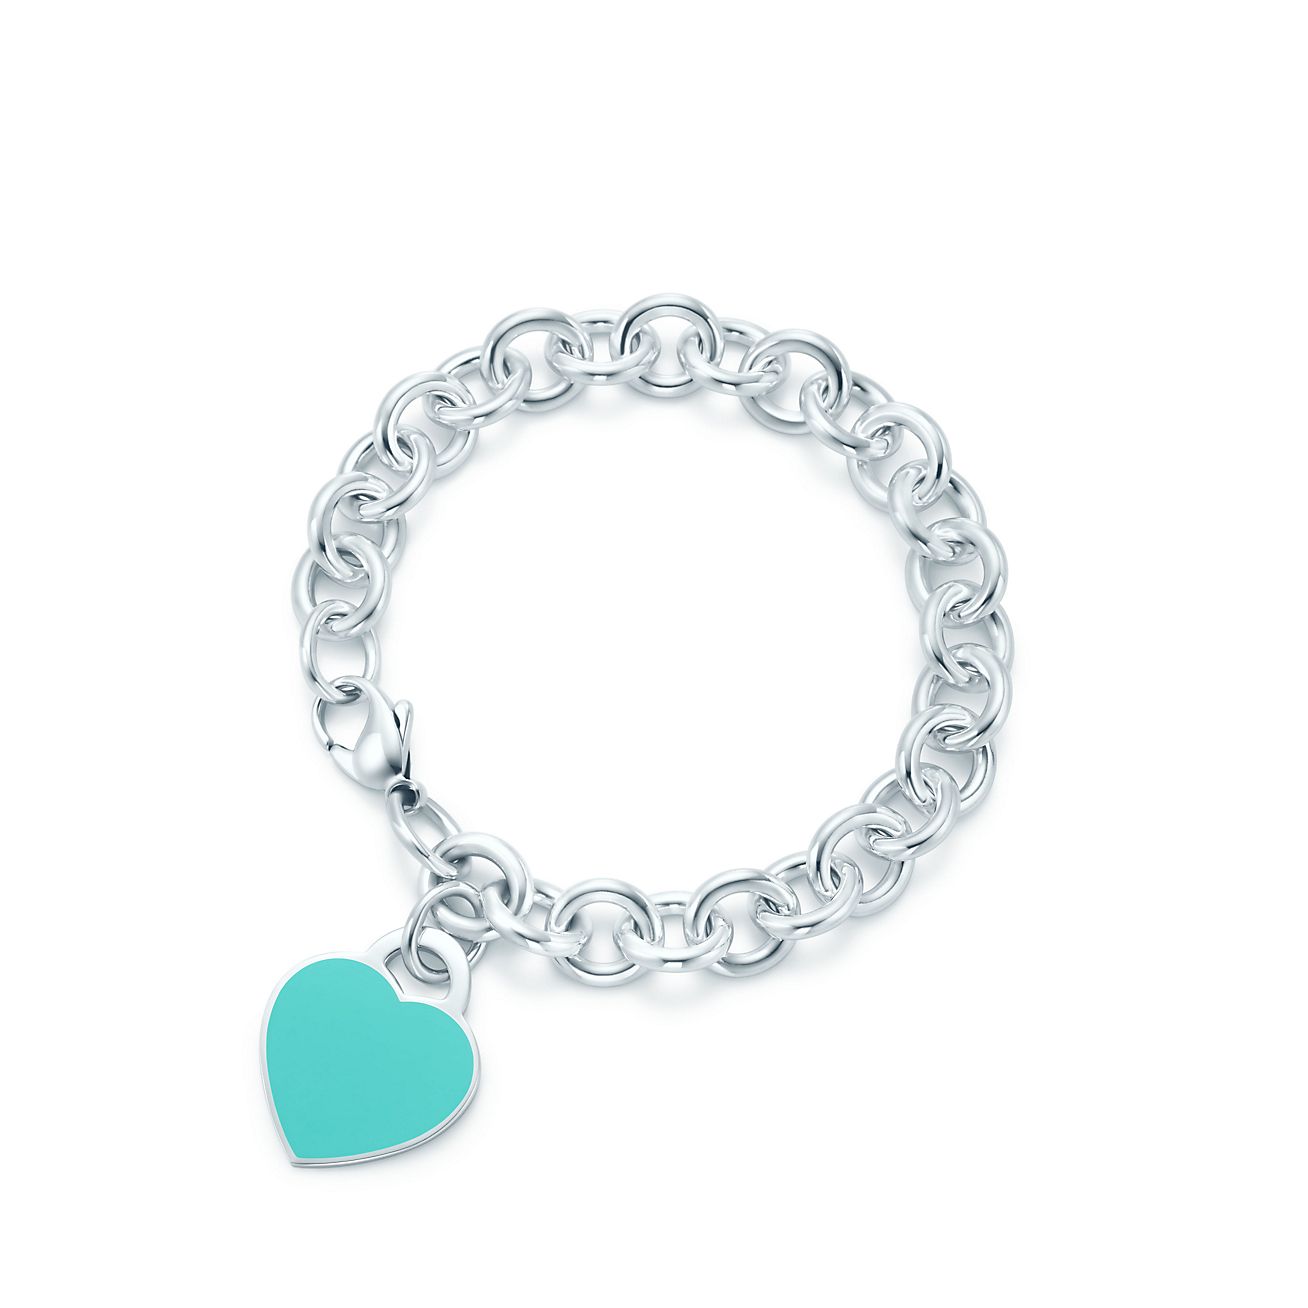 Return to Tiffany™Tiffany Blue® Heart Tag Bracelet
in Silver